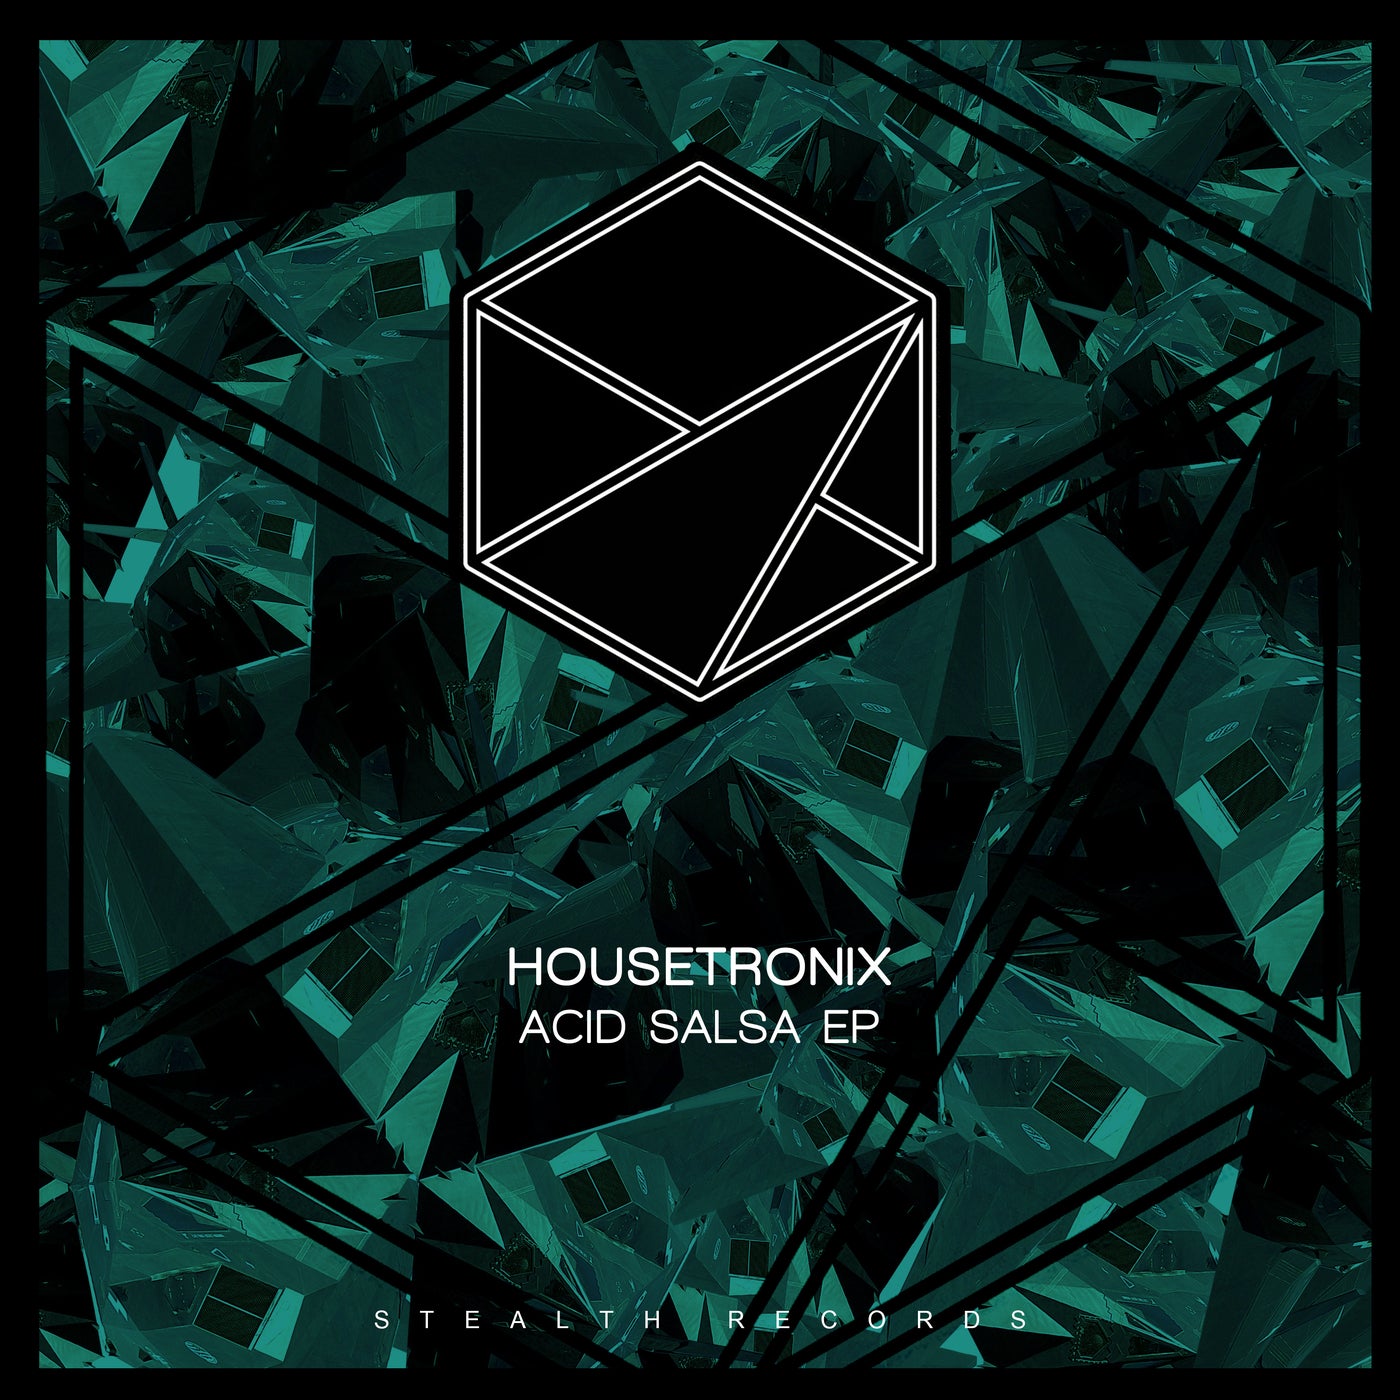 image cover: Housetronix - Acid Salsa EP / STEALTH217